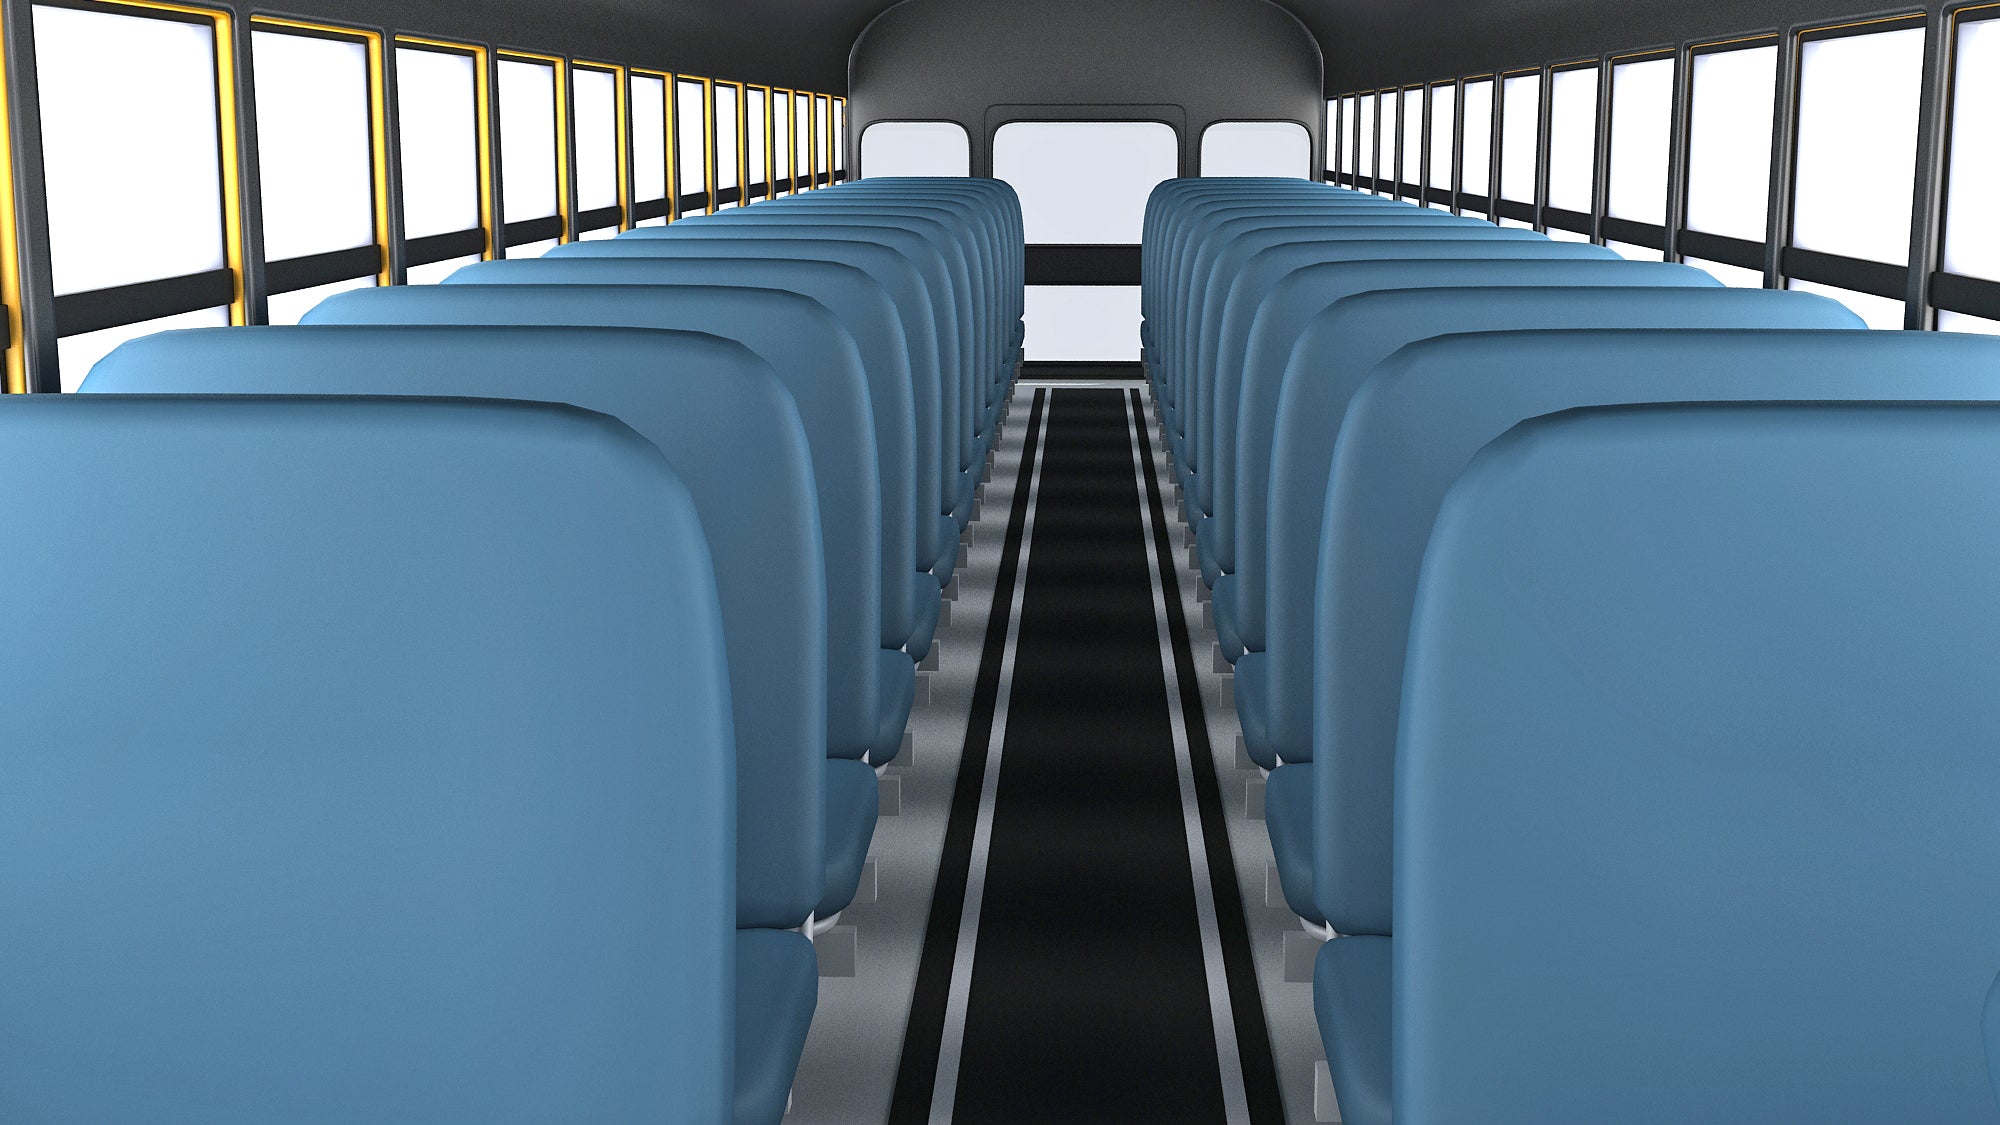 Blue Bird School Bus 3D Model